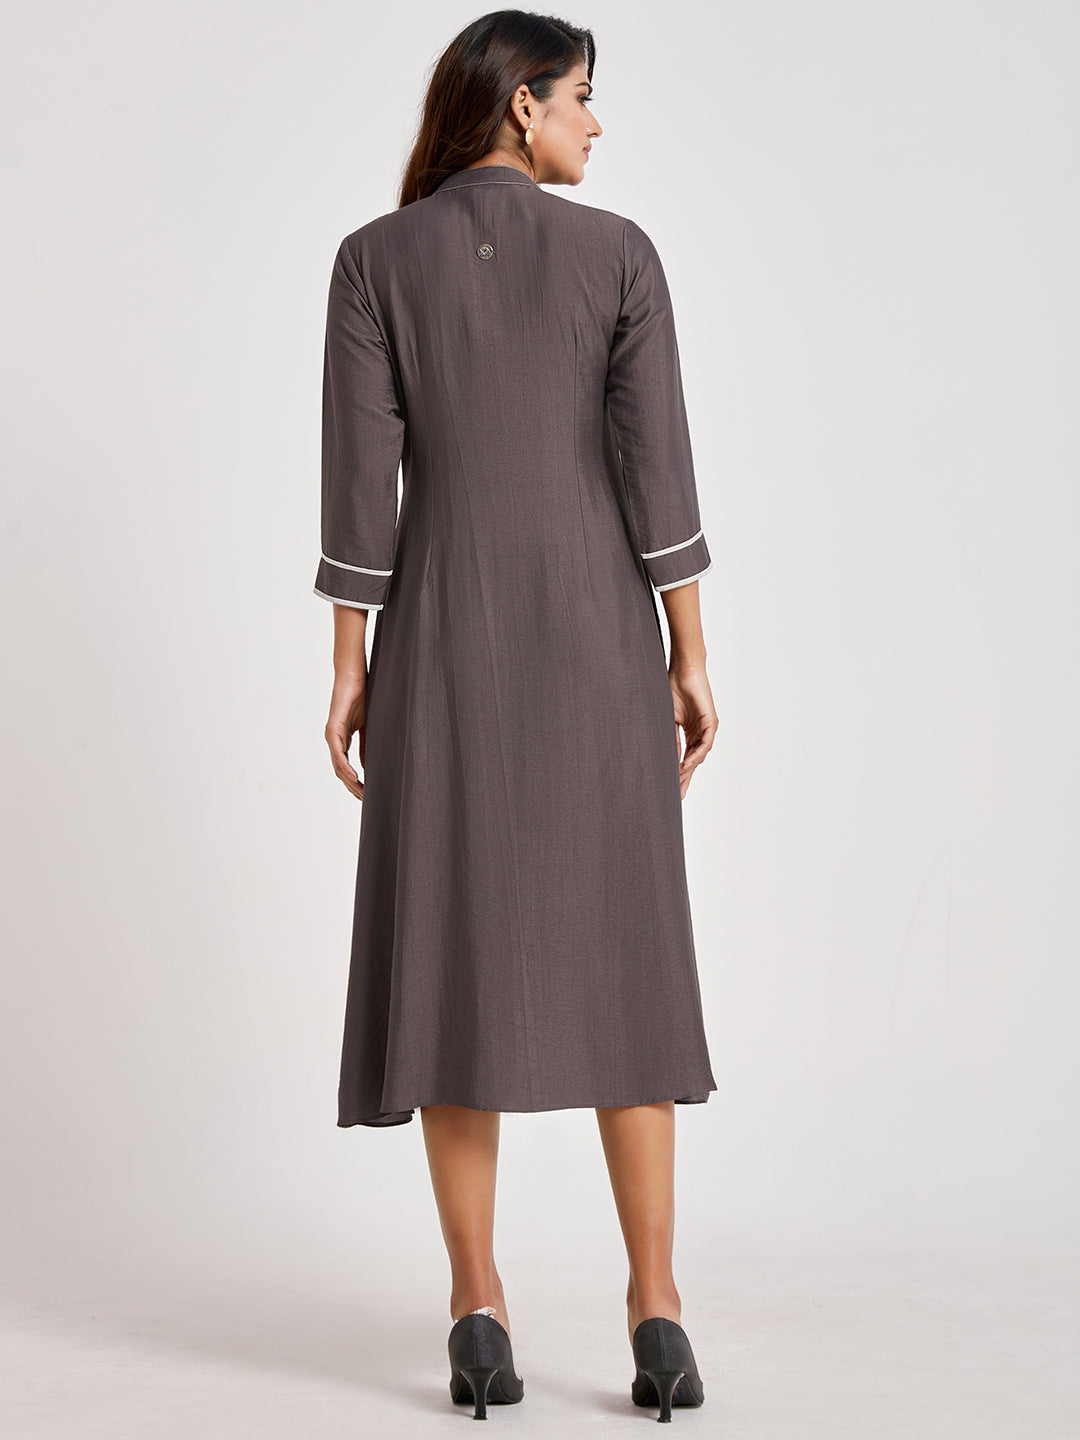 Dim Grey A-Line Dress With Mock Buttons - ARH1154